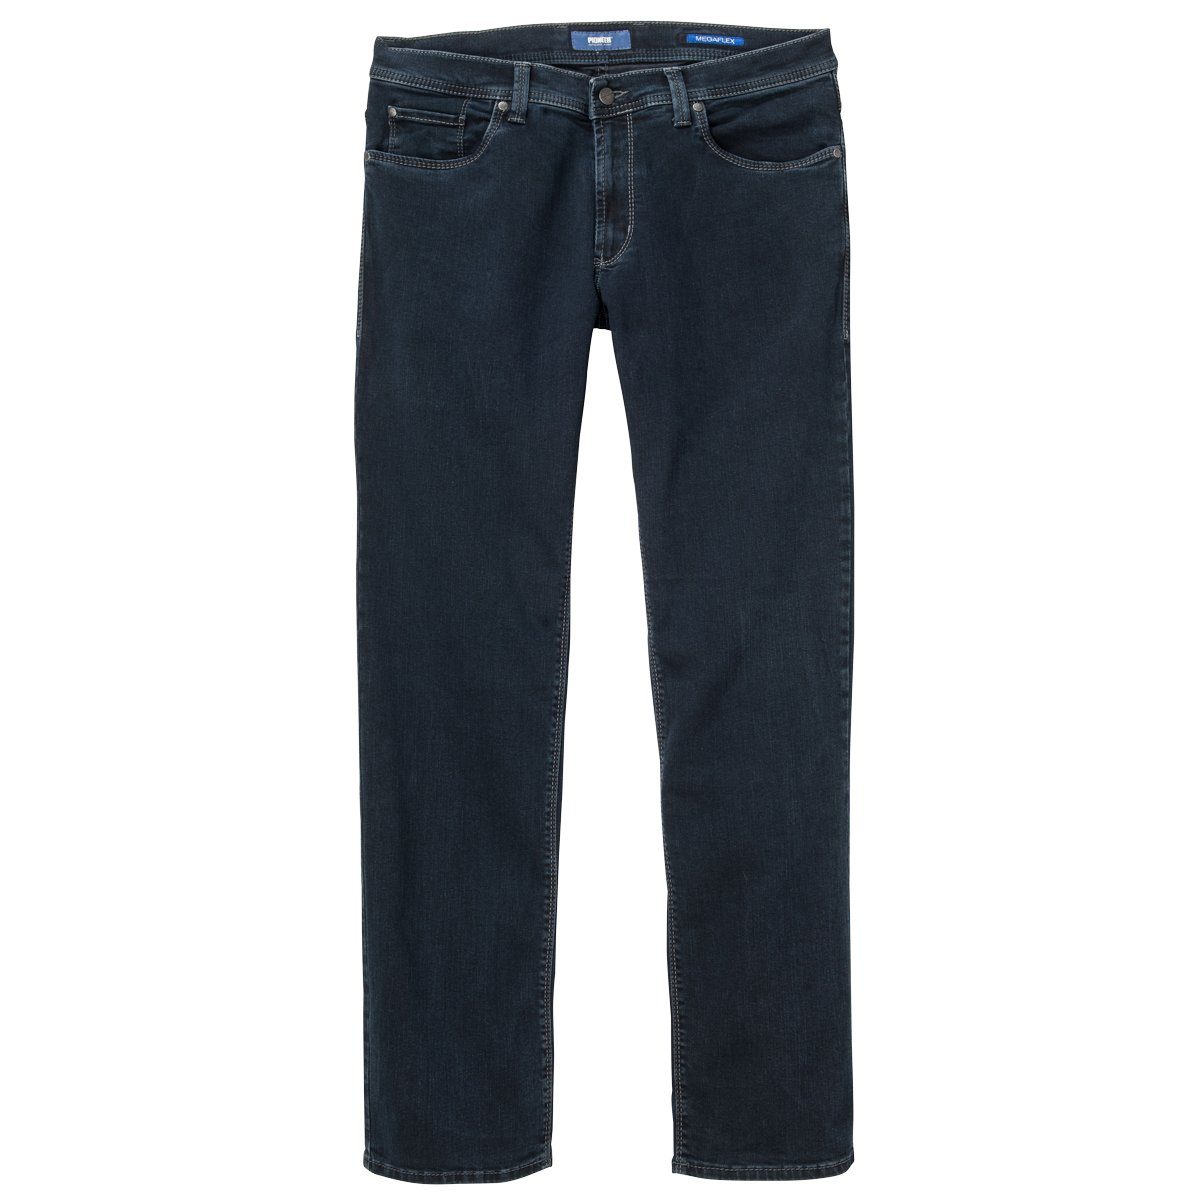 Pionier Stretch-Jeans Große Größen black rinse blue Stretch-Jeans Thomas Pioneer